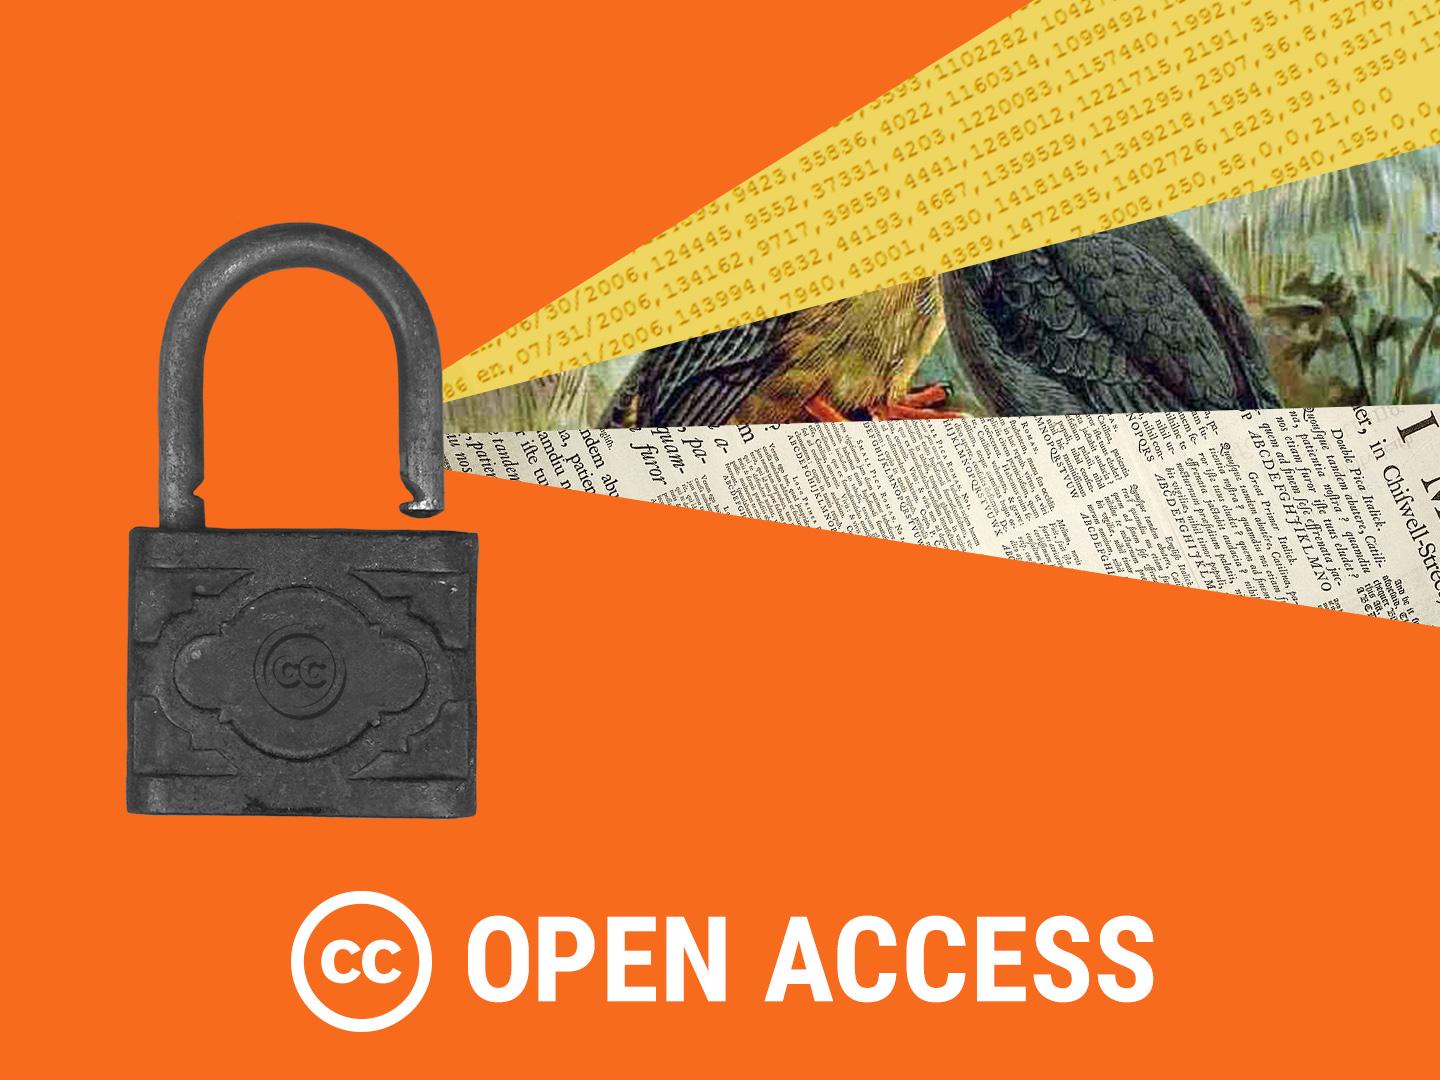 CC Open Access lock image